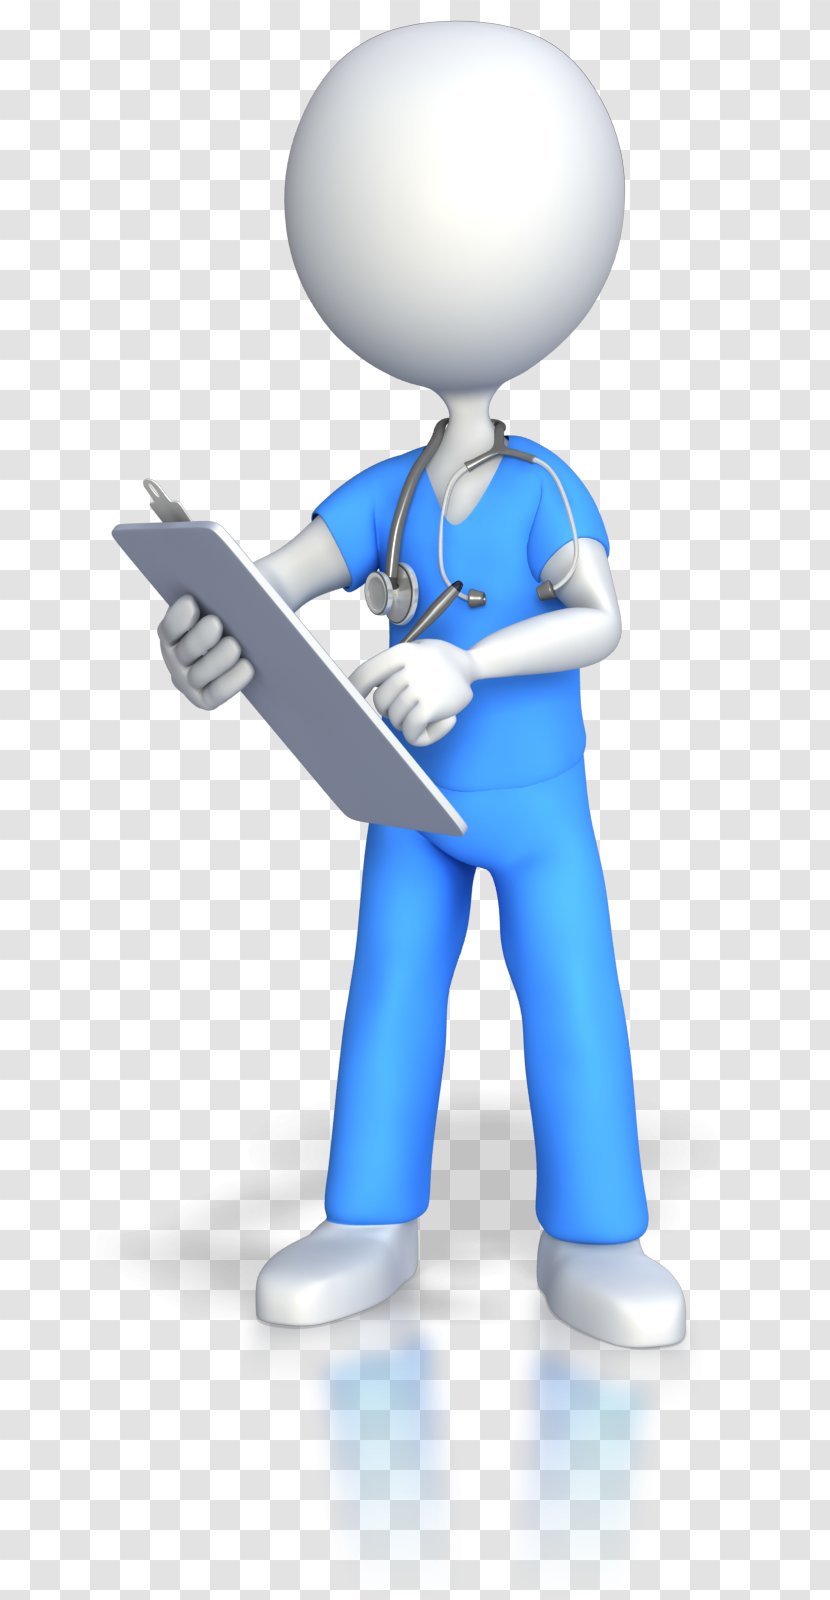 Nursing Registered Nurse Stick Figure Animation Clip Art - Presentation - Male Transparent PNG